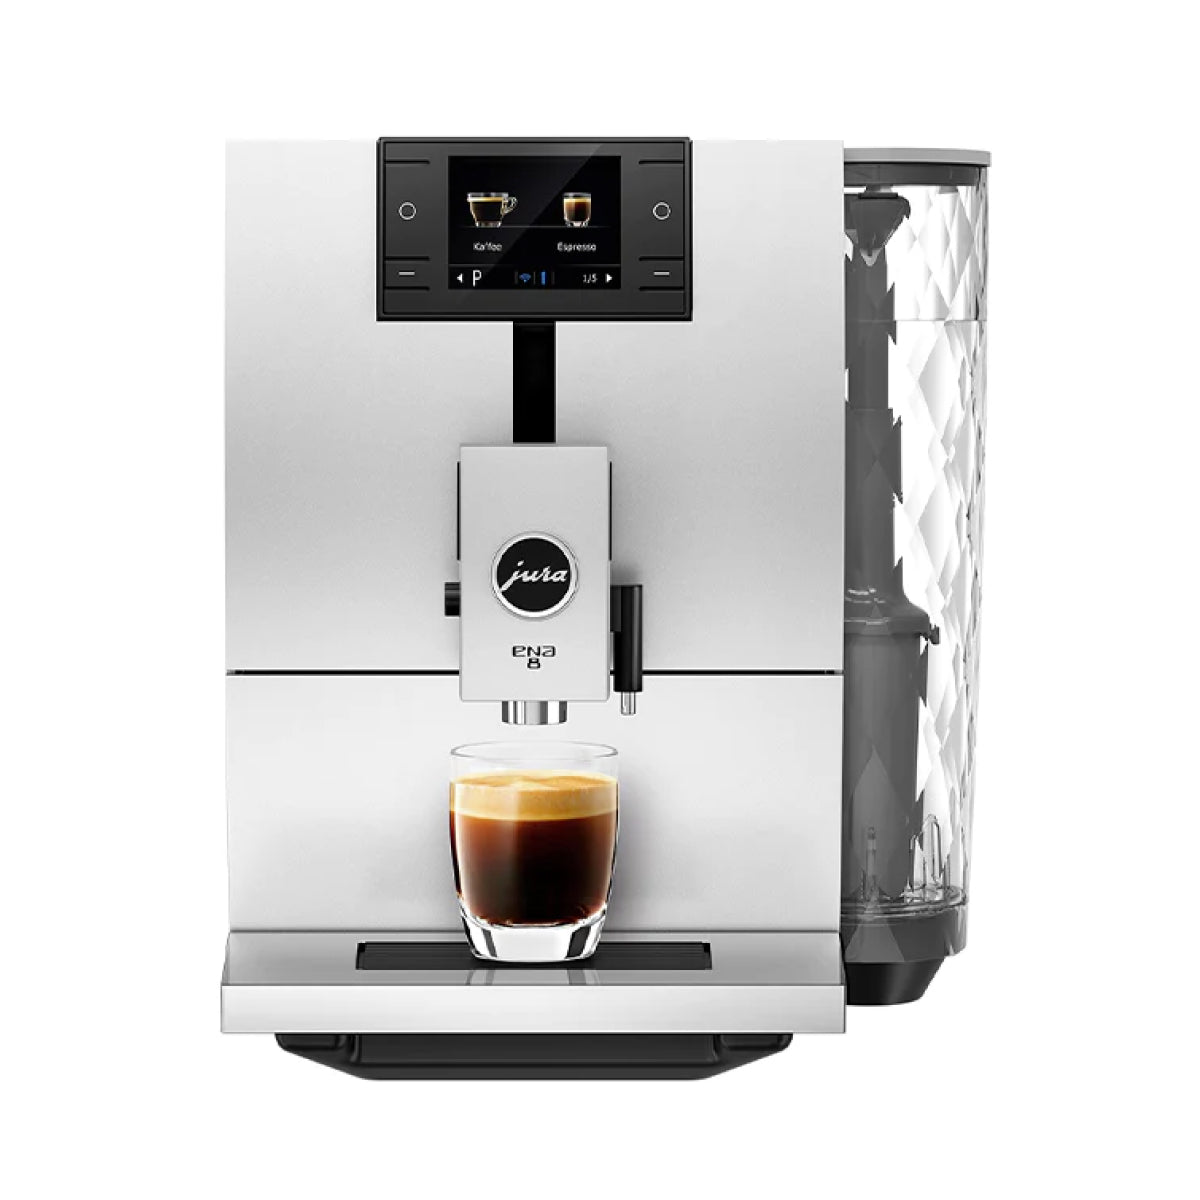 Jura Ena 8 Superautomatic Espresso Machine